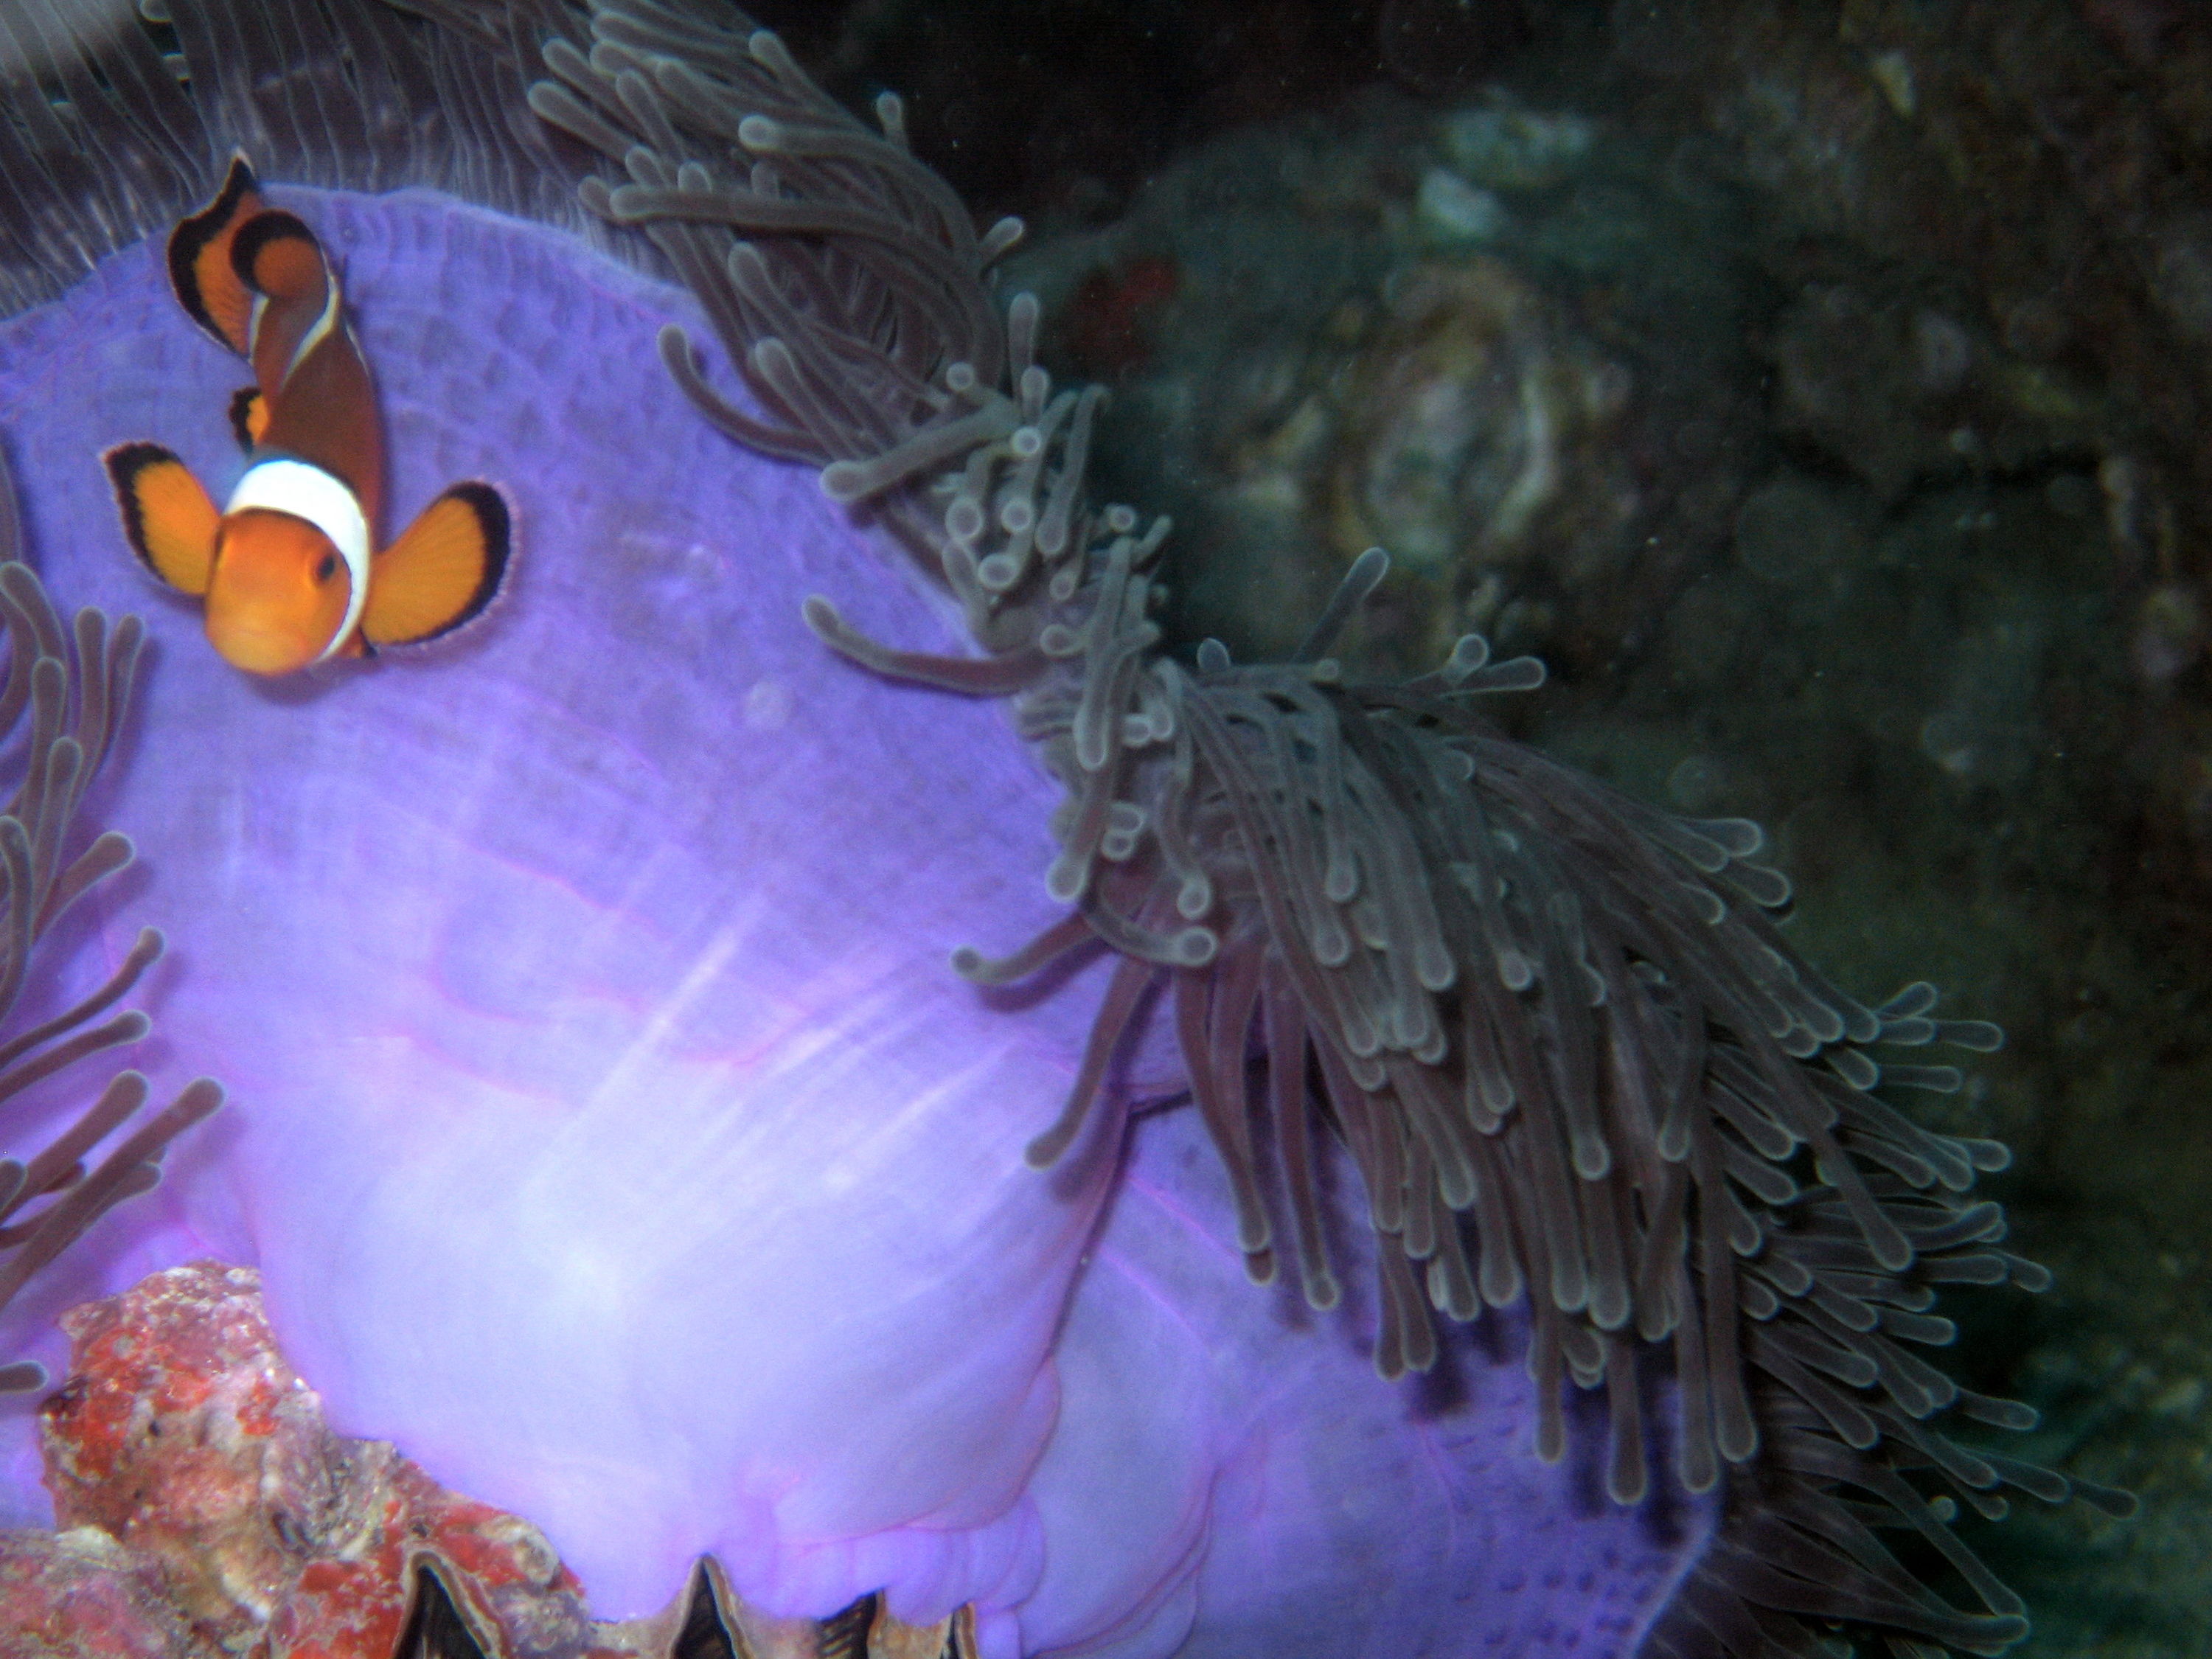 Clown fish and purple anemone